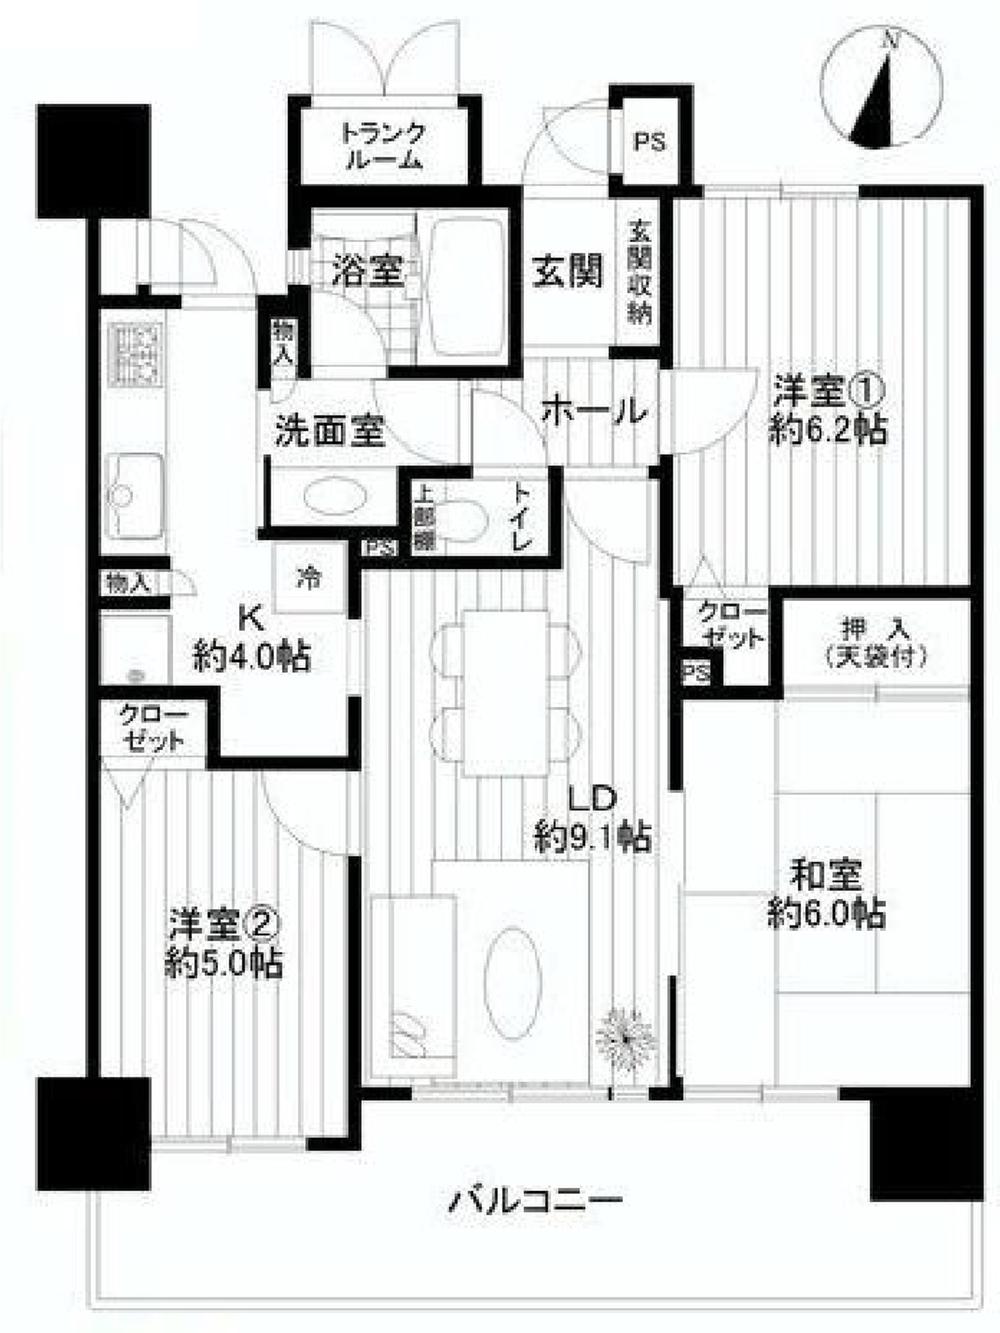 Floor plan. 3LDK, Price 17.8 million yen, Occupied area 65.72 sq m , Balcony area 15.07 sq m